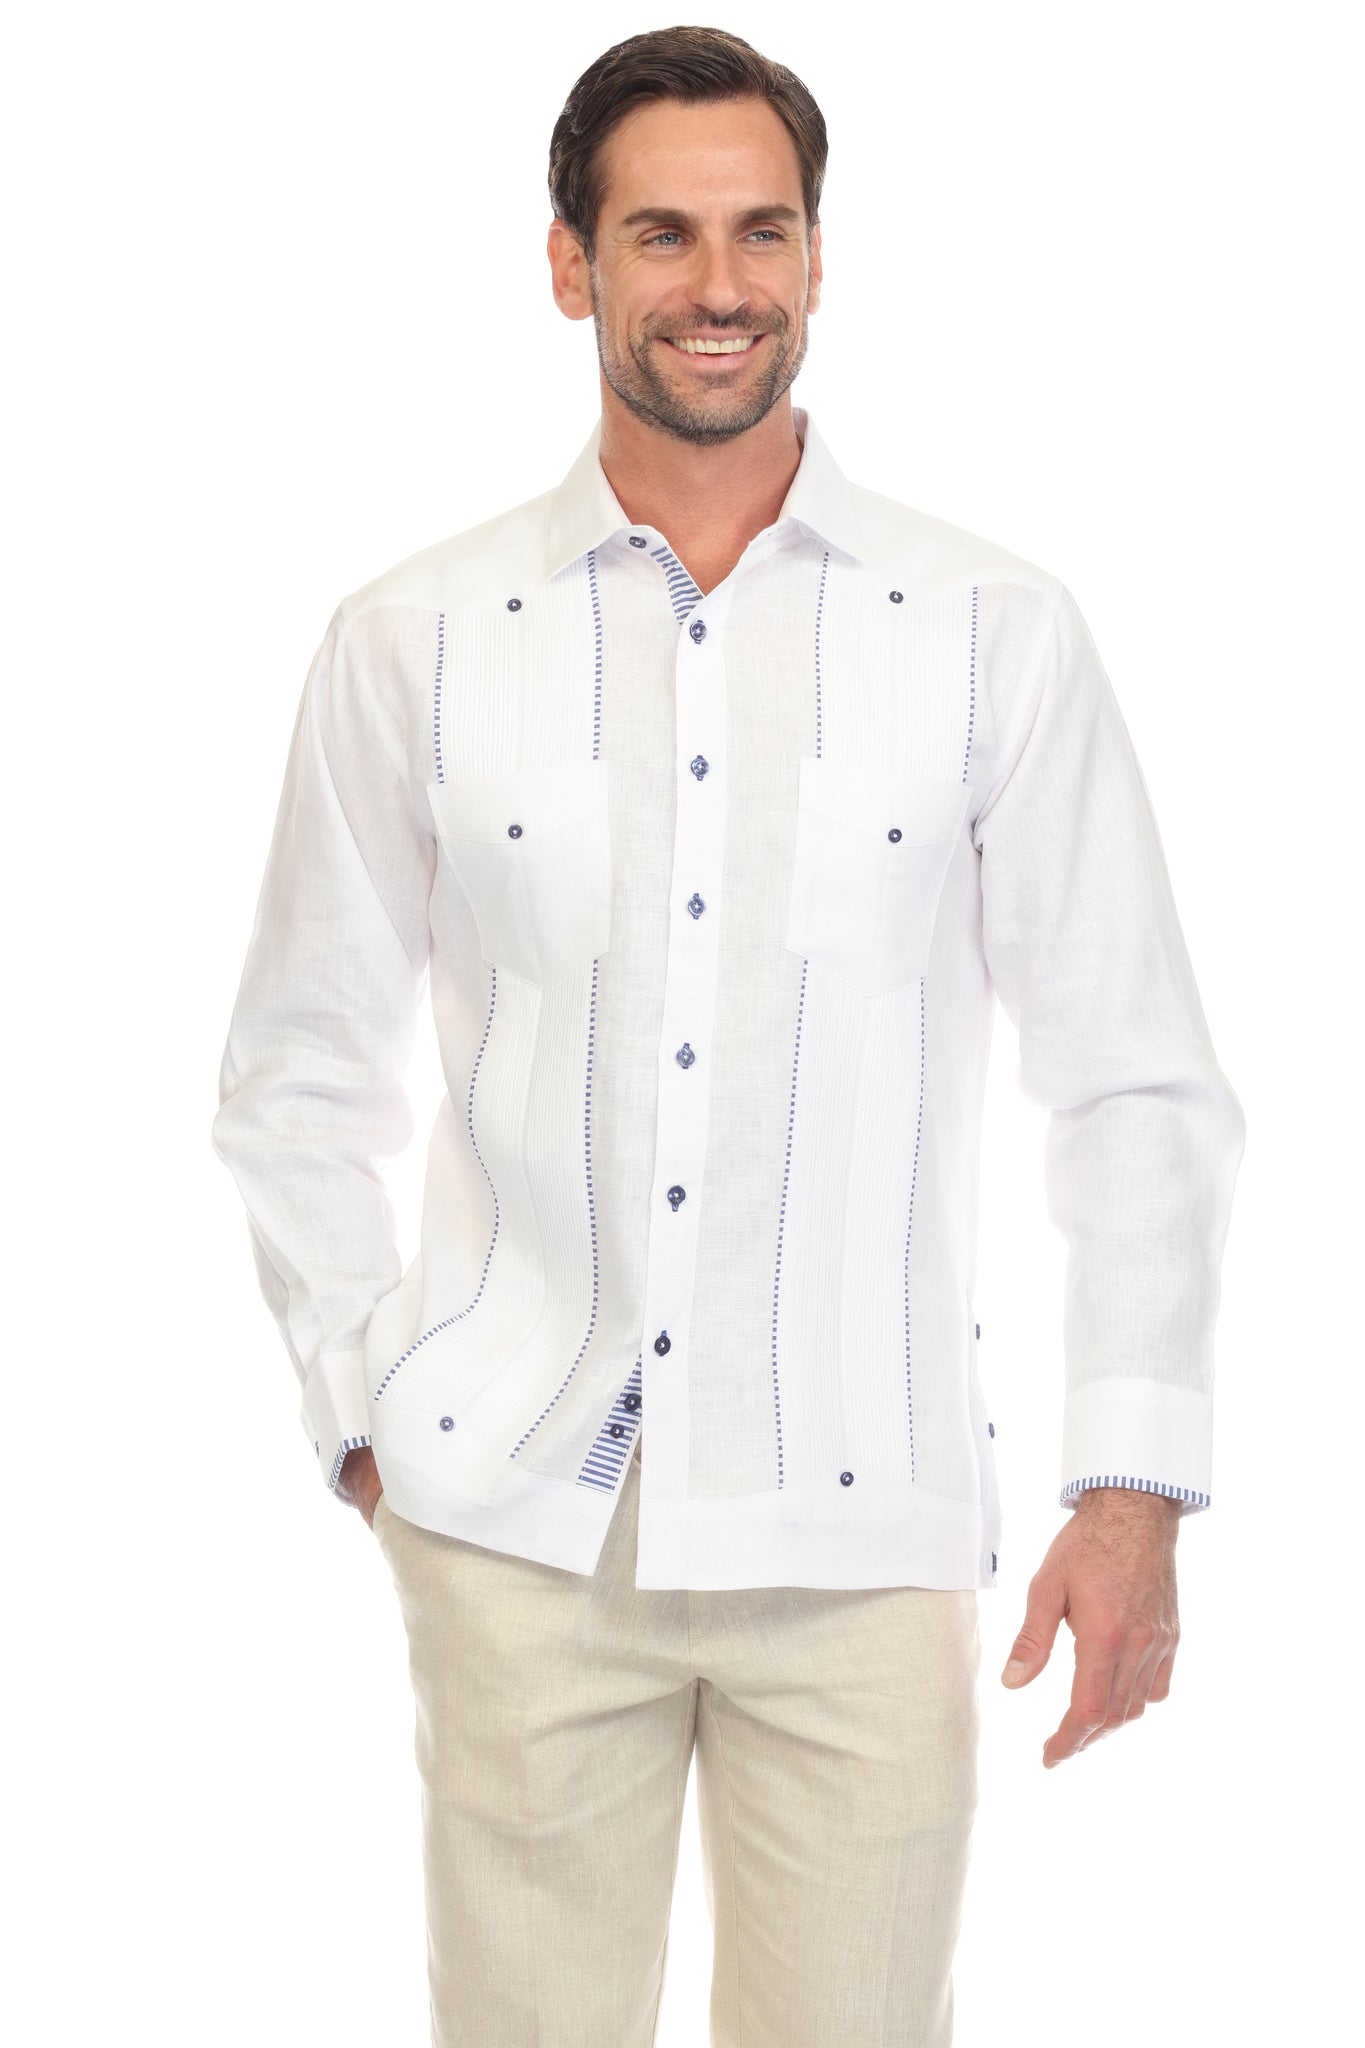 Mojito Men's 100% Linen Guayabera Shirt Long Sleeve with Print Trim Accent